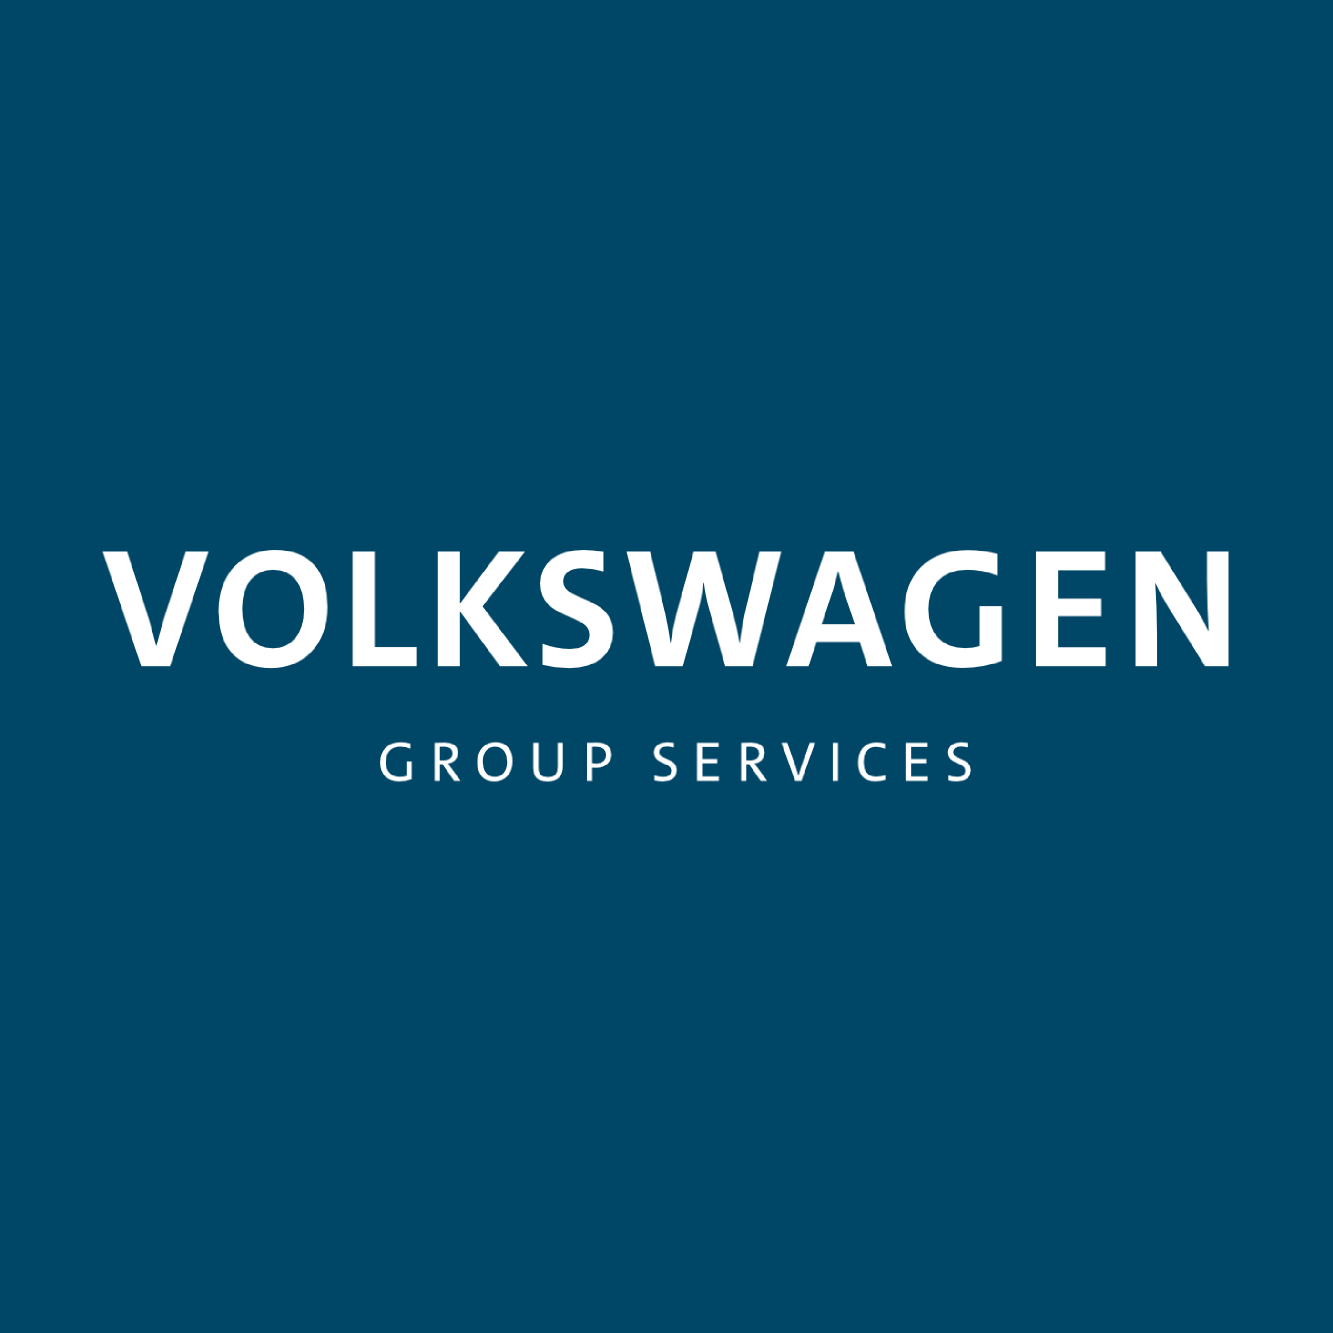 Volkswagen Group Services logo